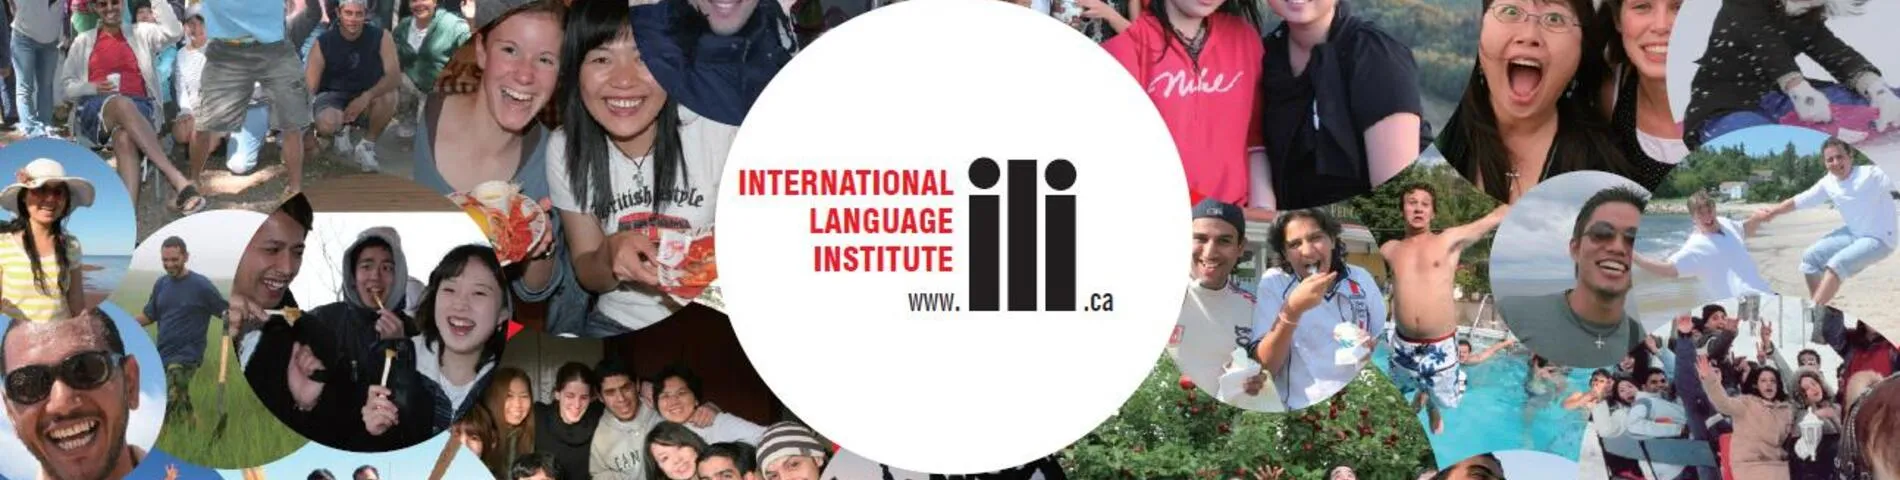 ILI - International Language Institute 사진 1